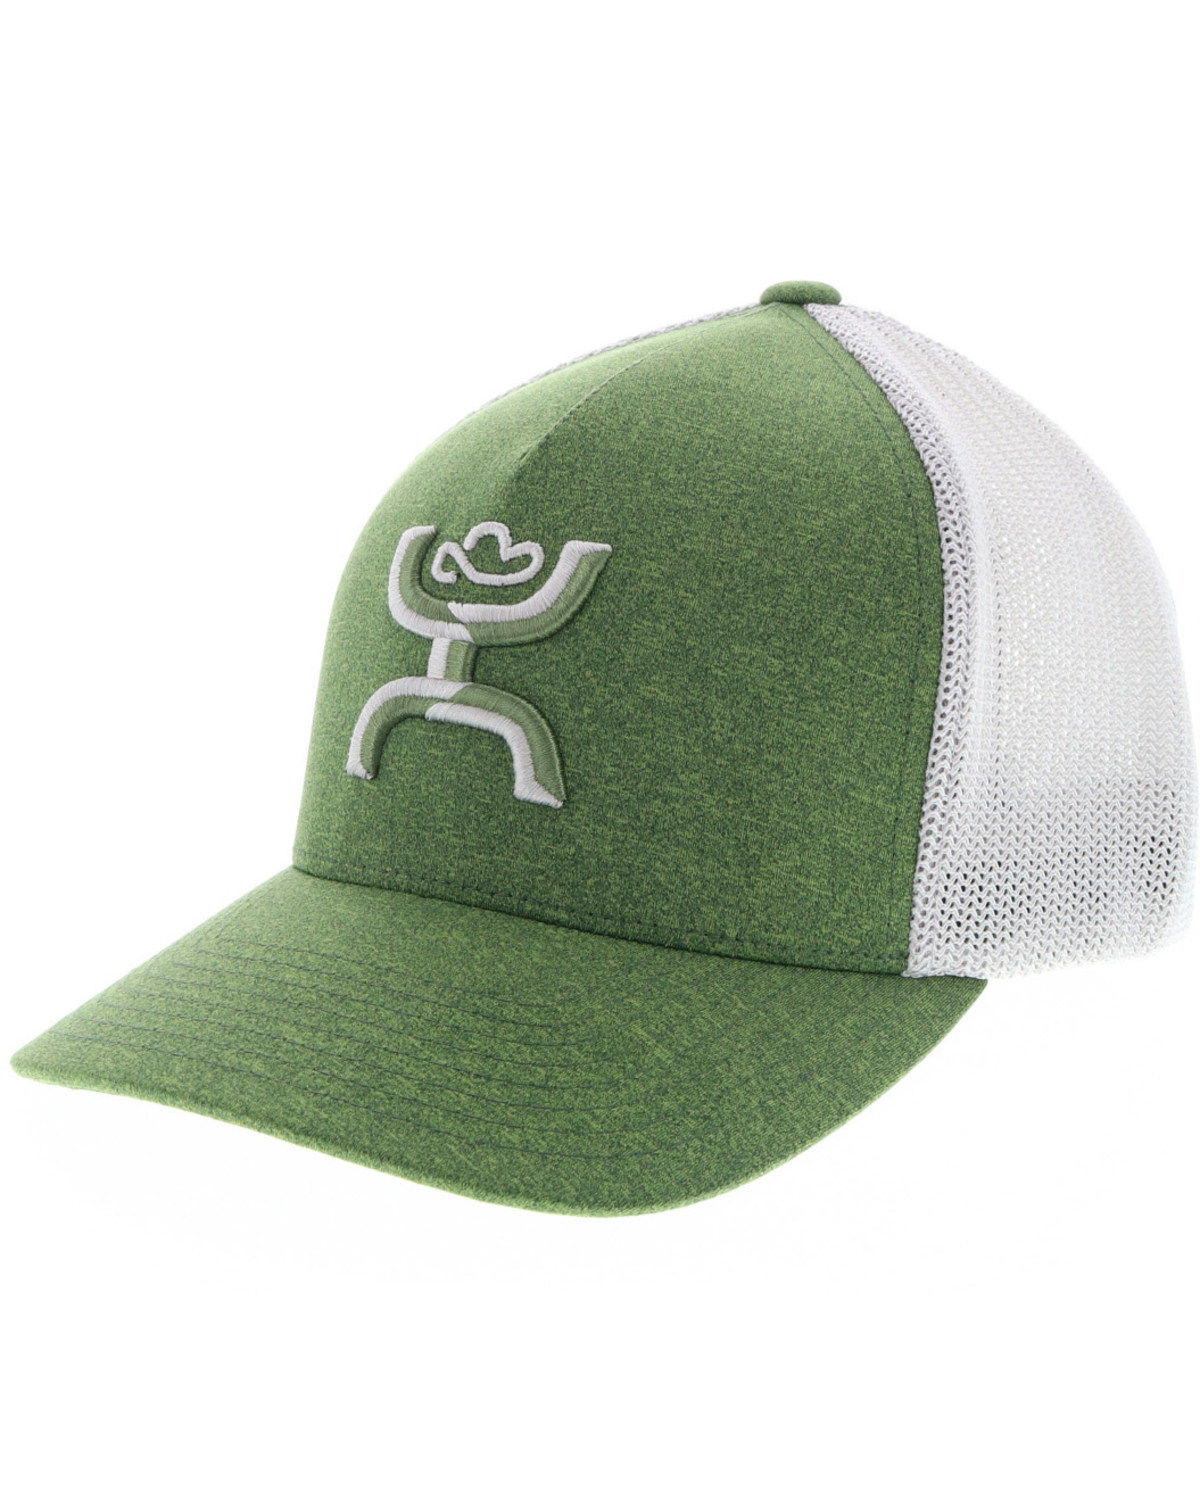 Store Hooey Mens Coach Green Mesh Cap Bfef2 7a423 - Green Hooey Hat , HD Wallpaper & Backgrounds